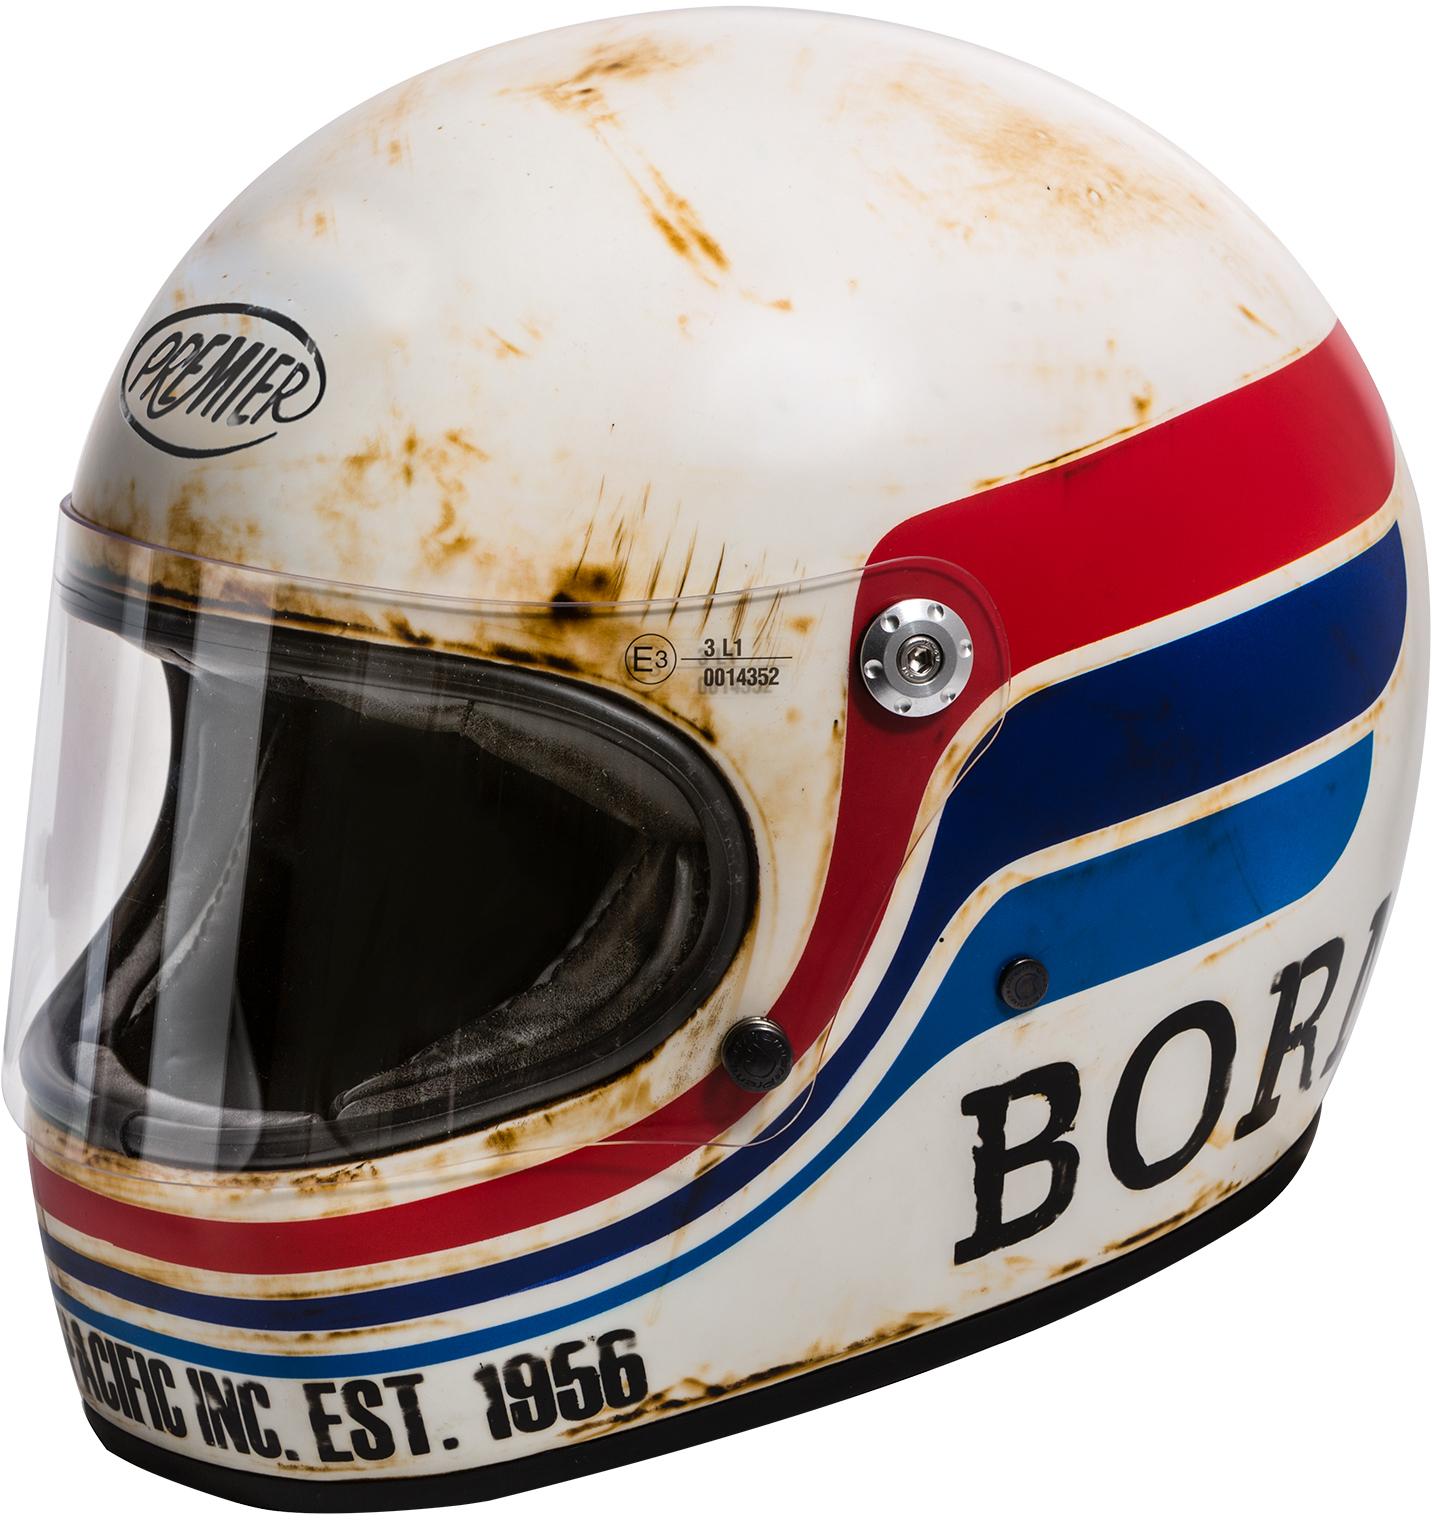 Premier Trophy Vintage Helmet Matt White/Black/Red - Extra Large